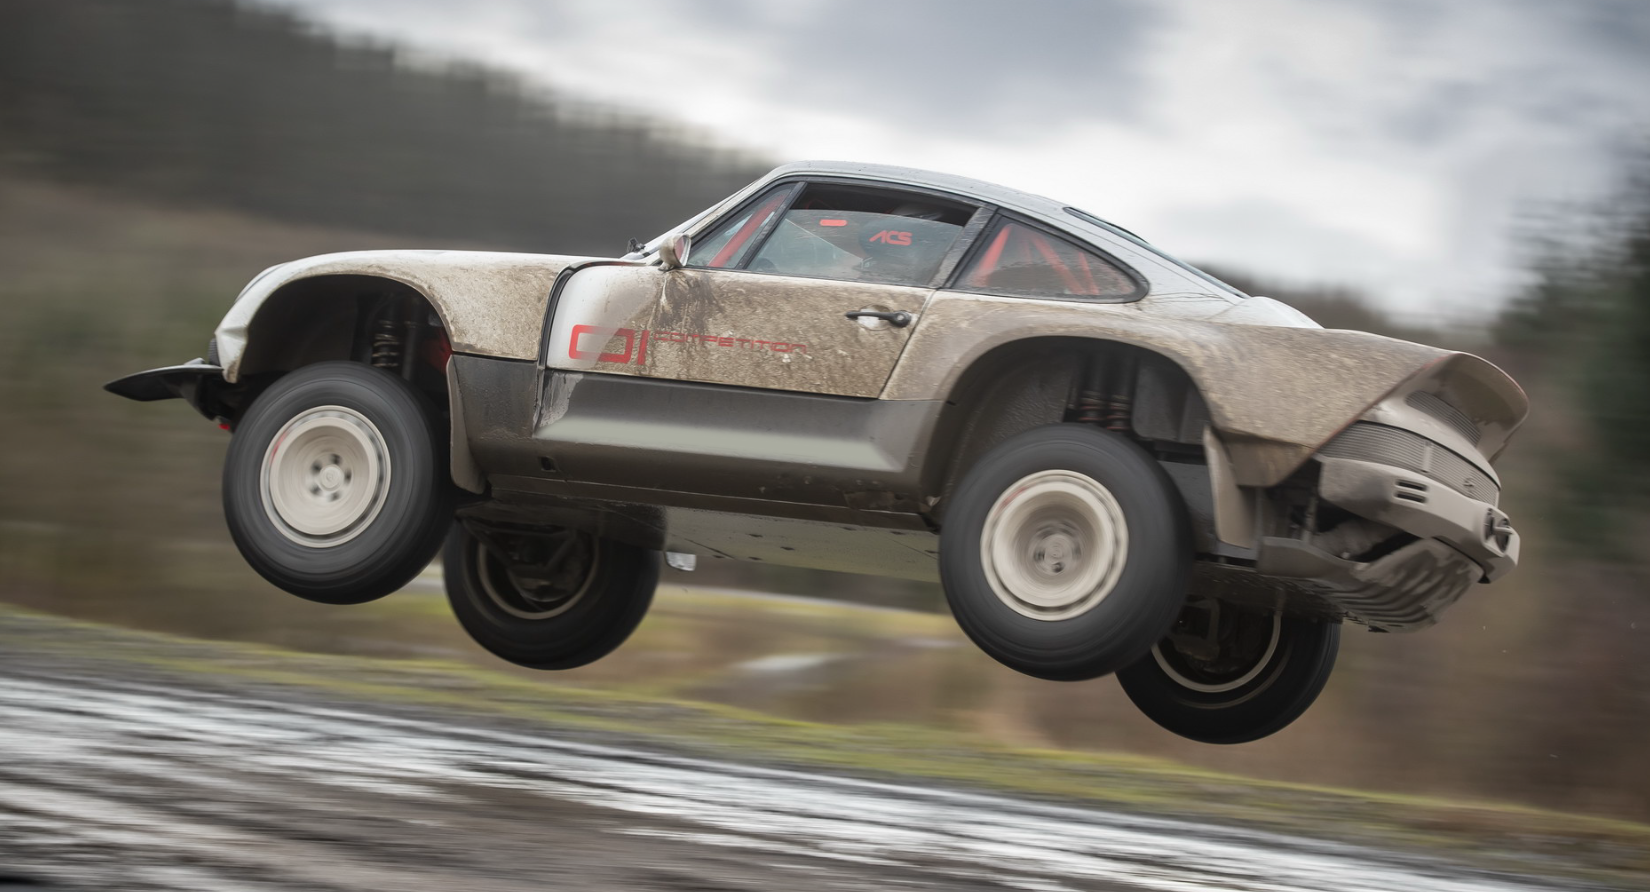 Singer ACS Porsche flying in jump